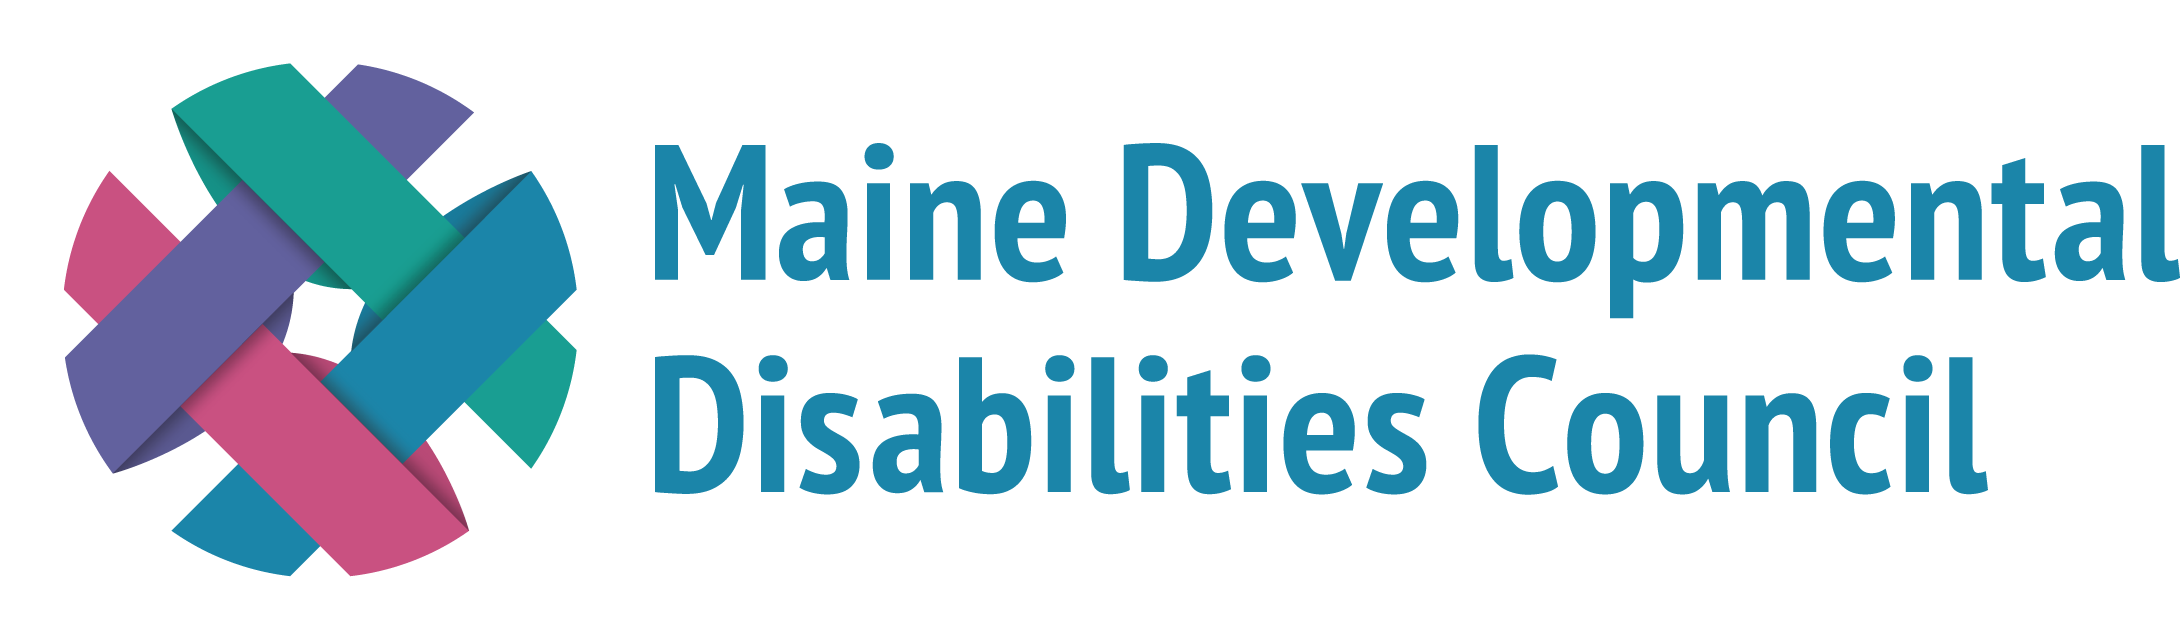 Maine Developmental Disabilities Council Logo